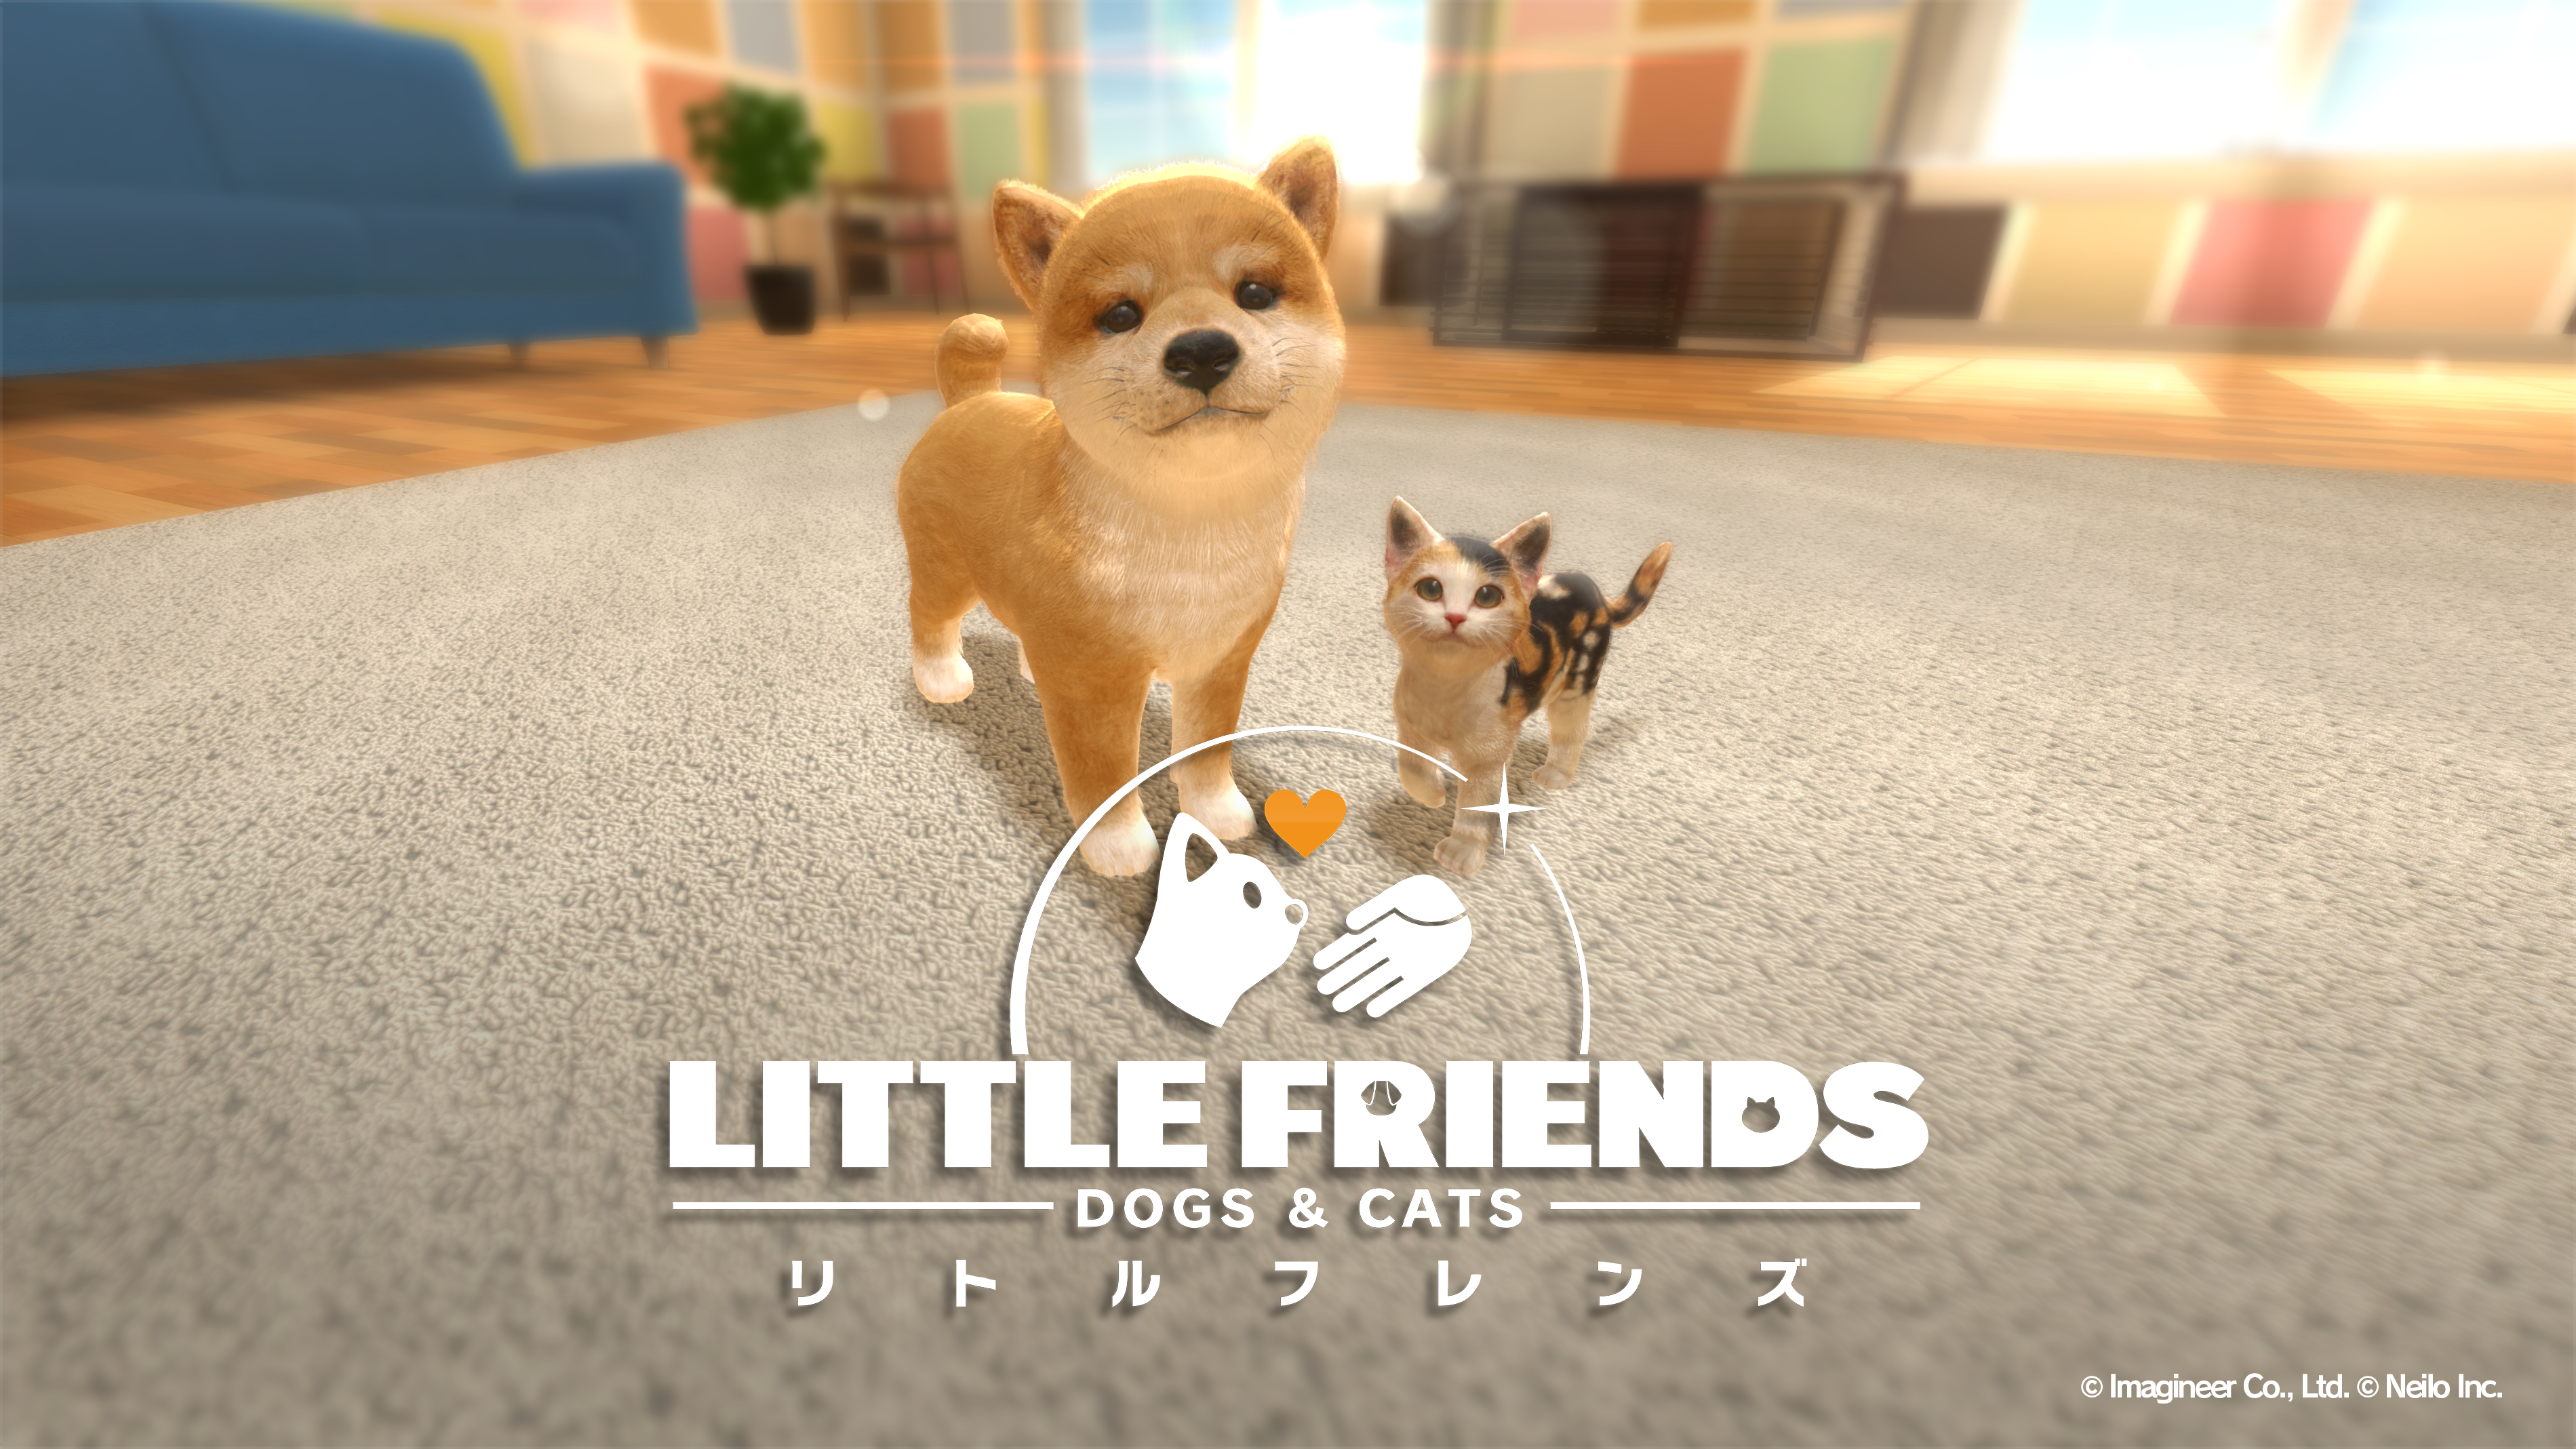 Nintendo Switch ソフト Little Friends Dogs Cats 発売決定のお知らせ Nintendo Switch初となる犬や猫のリアルな育成シミュレーションゲーム 18年10月1日 イマジニア株式会社